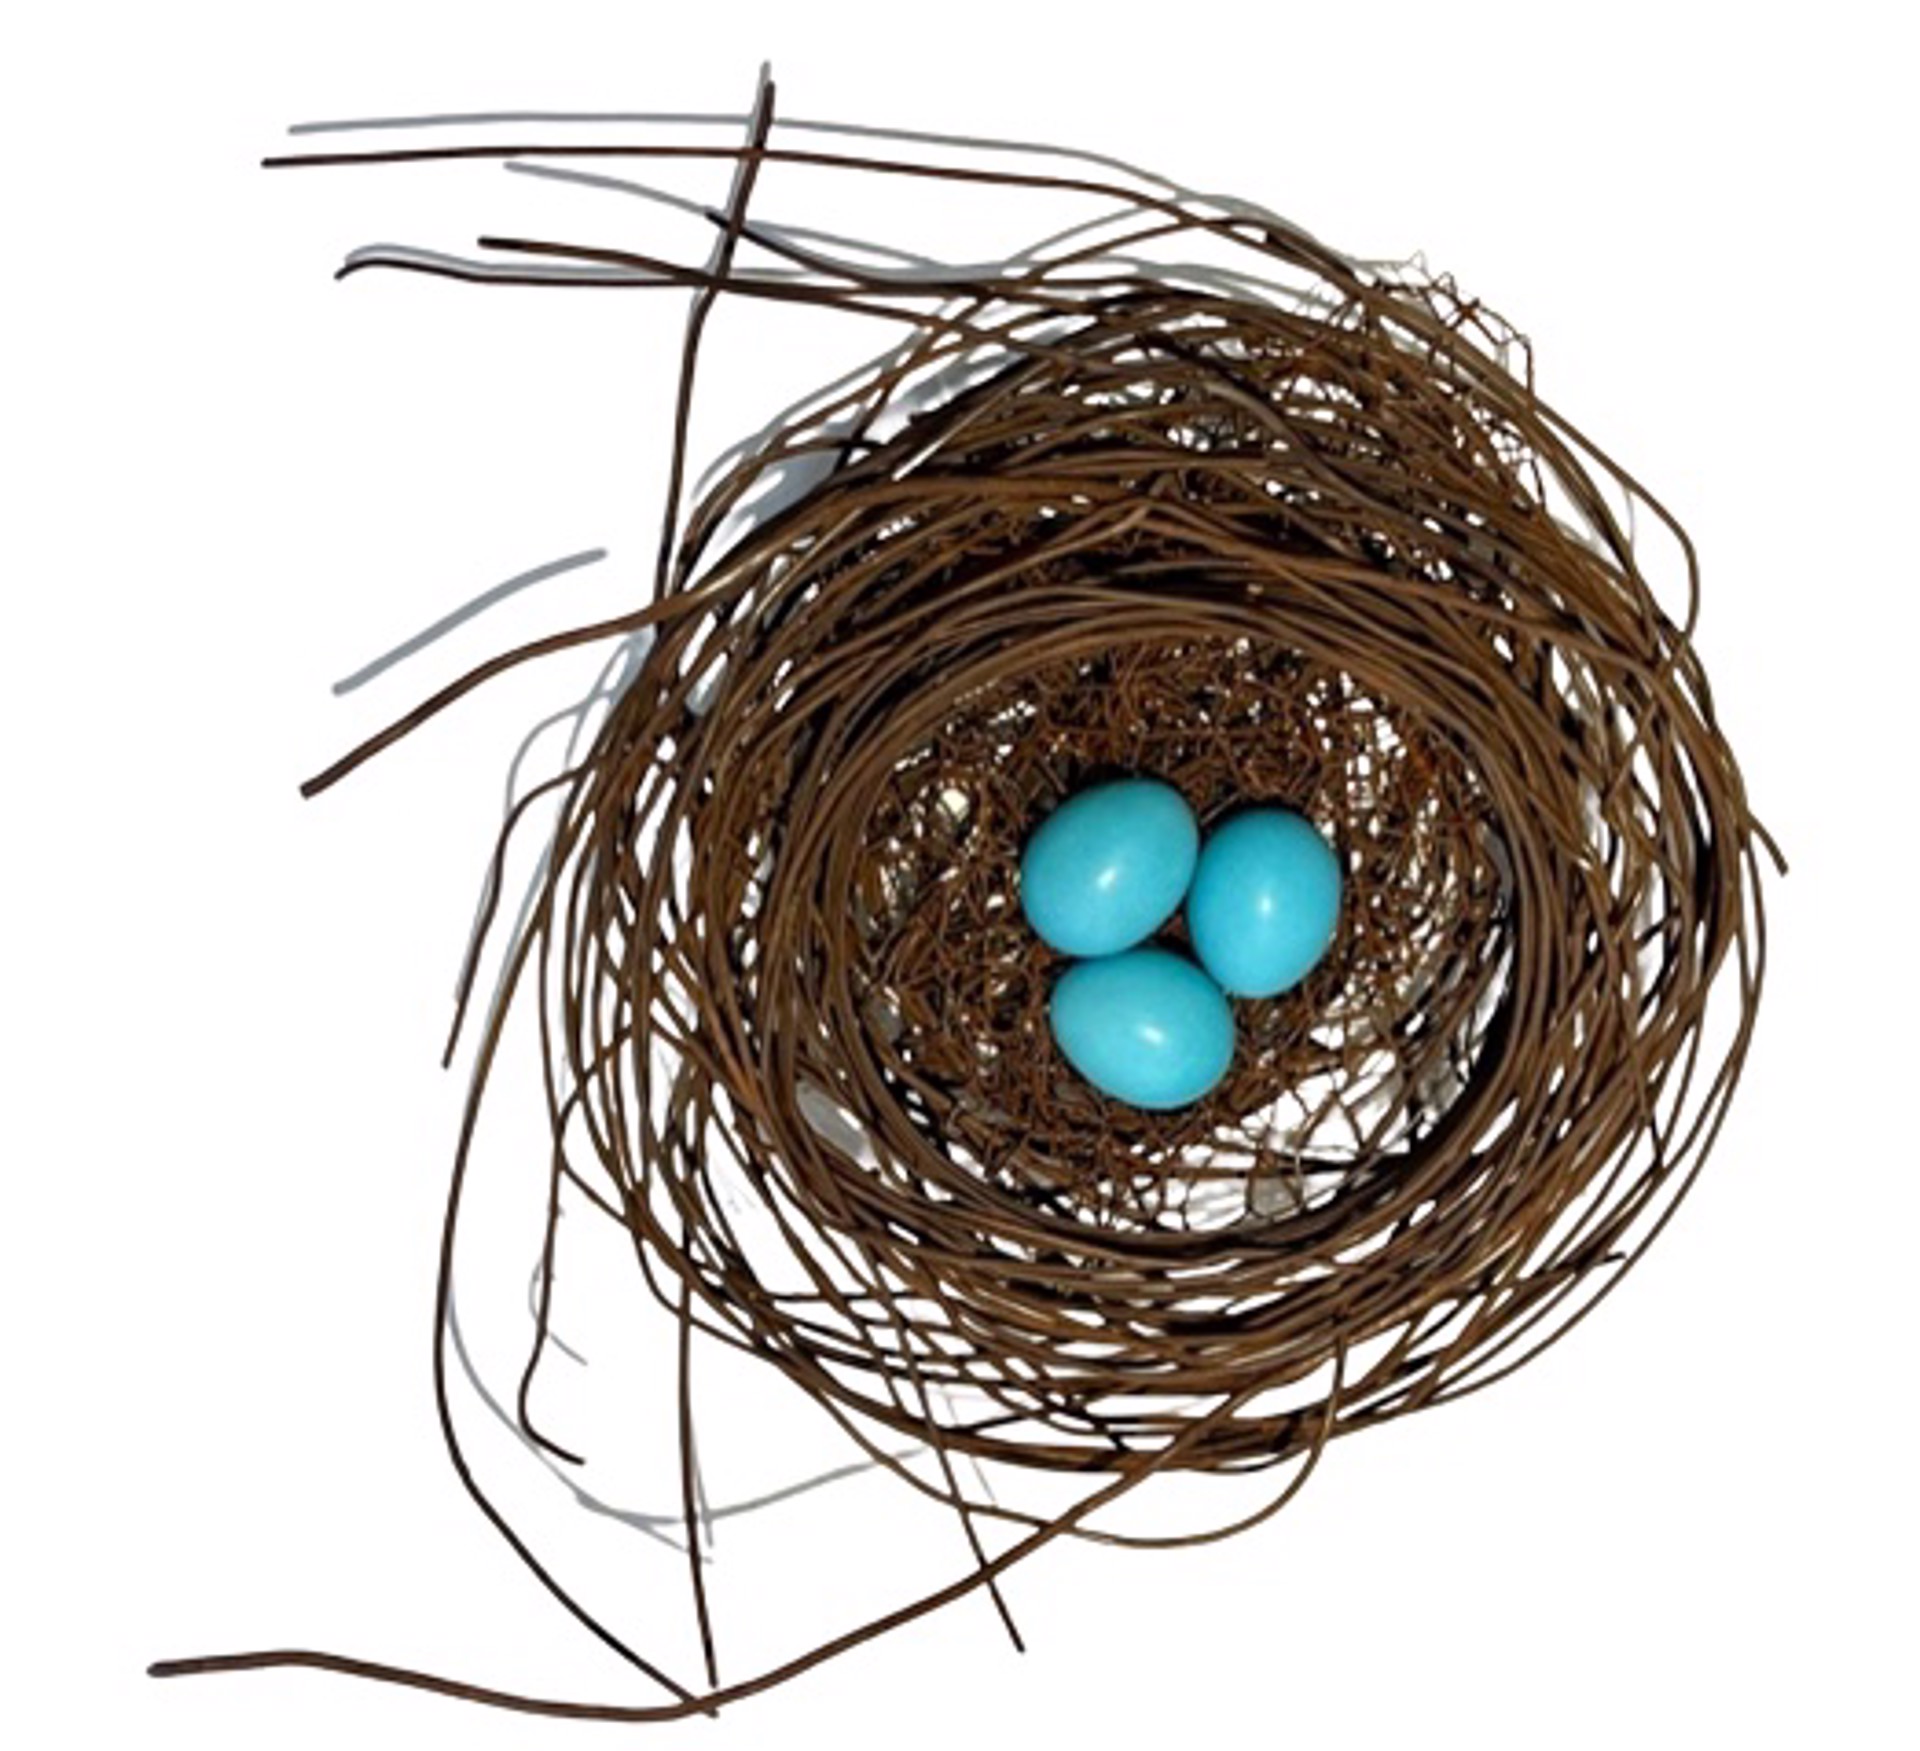 Hand Woven Wire Nest w/3 smallTurquoise Eggs #1372 by Phil Lichtenhan